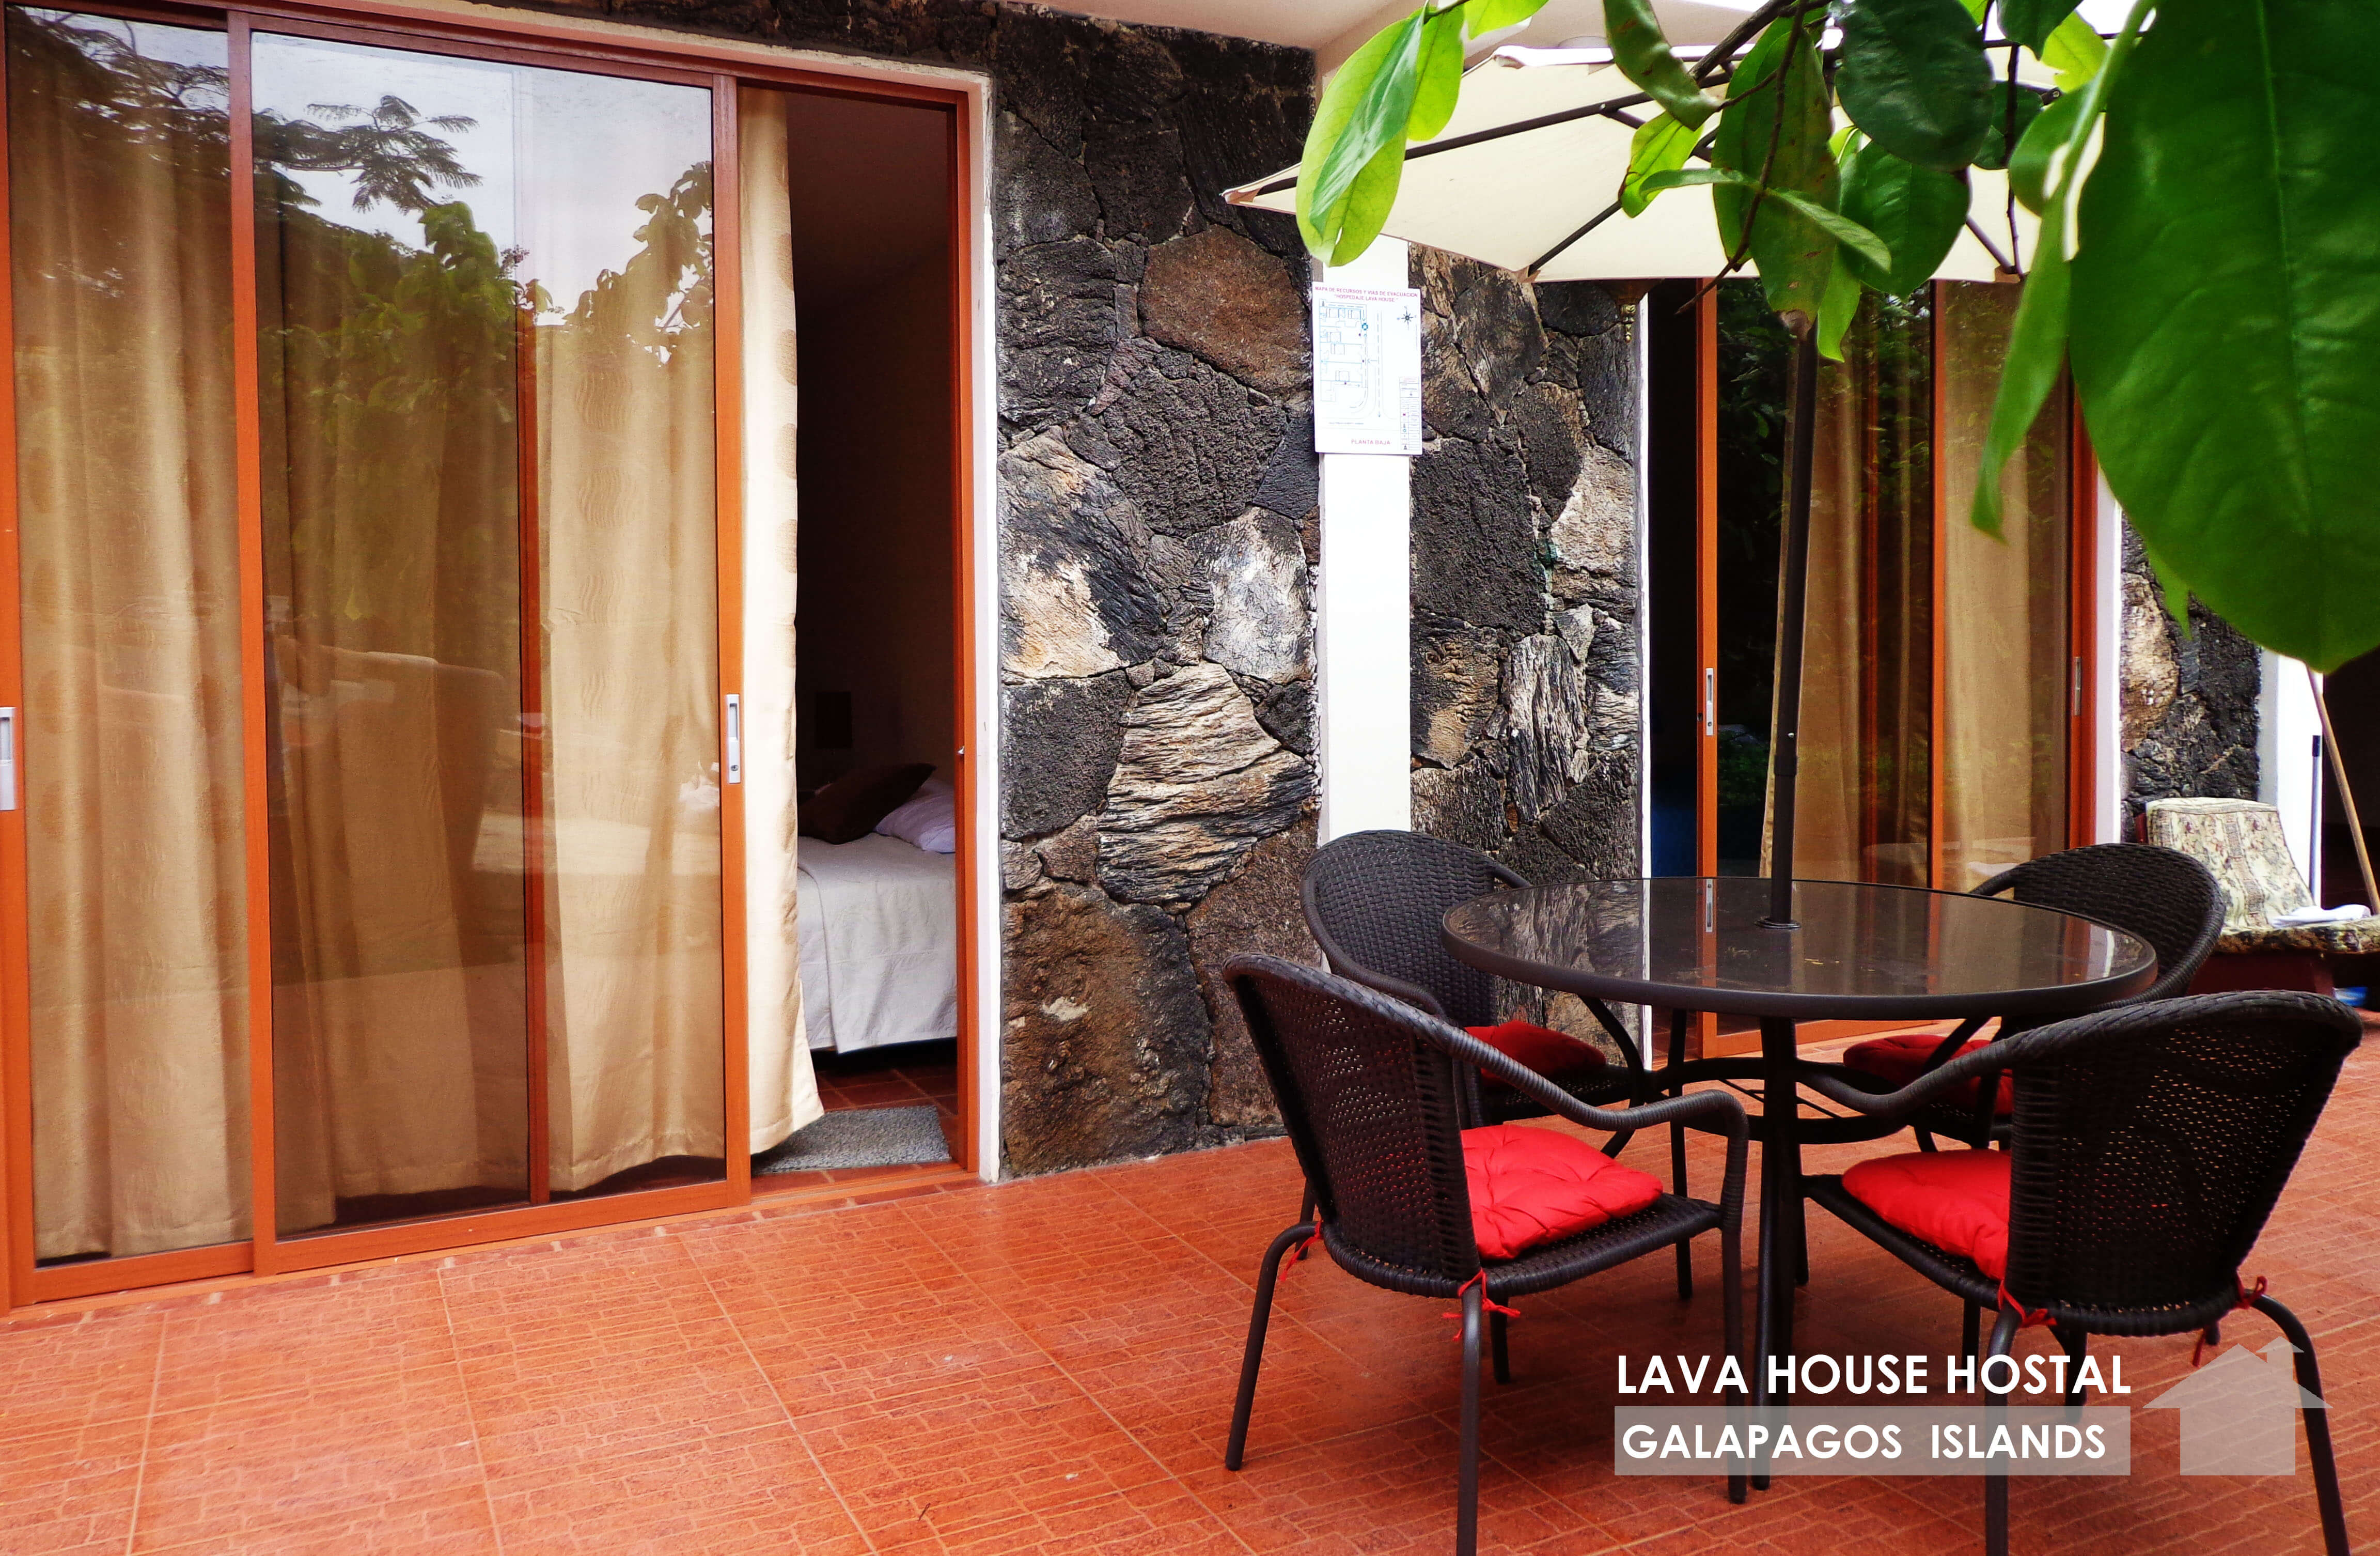 Lava House Hostal